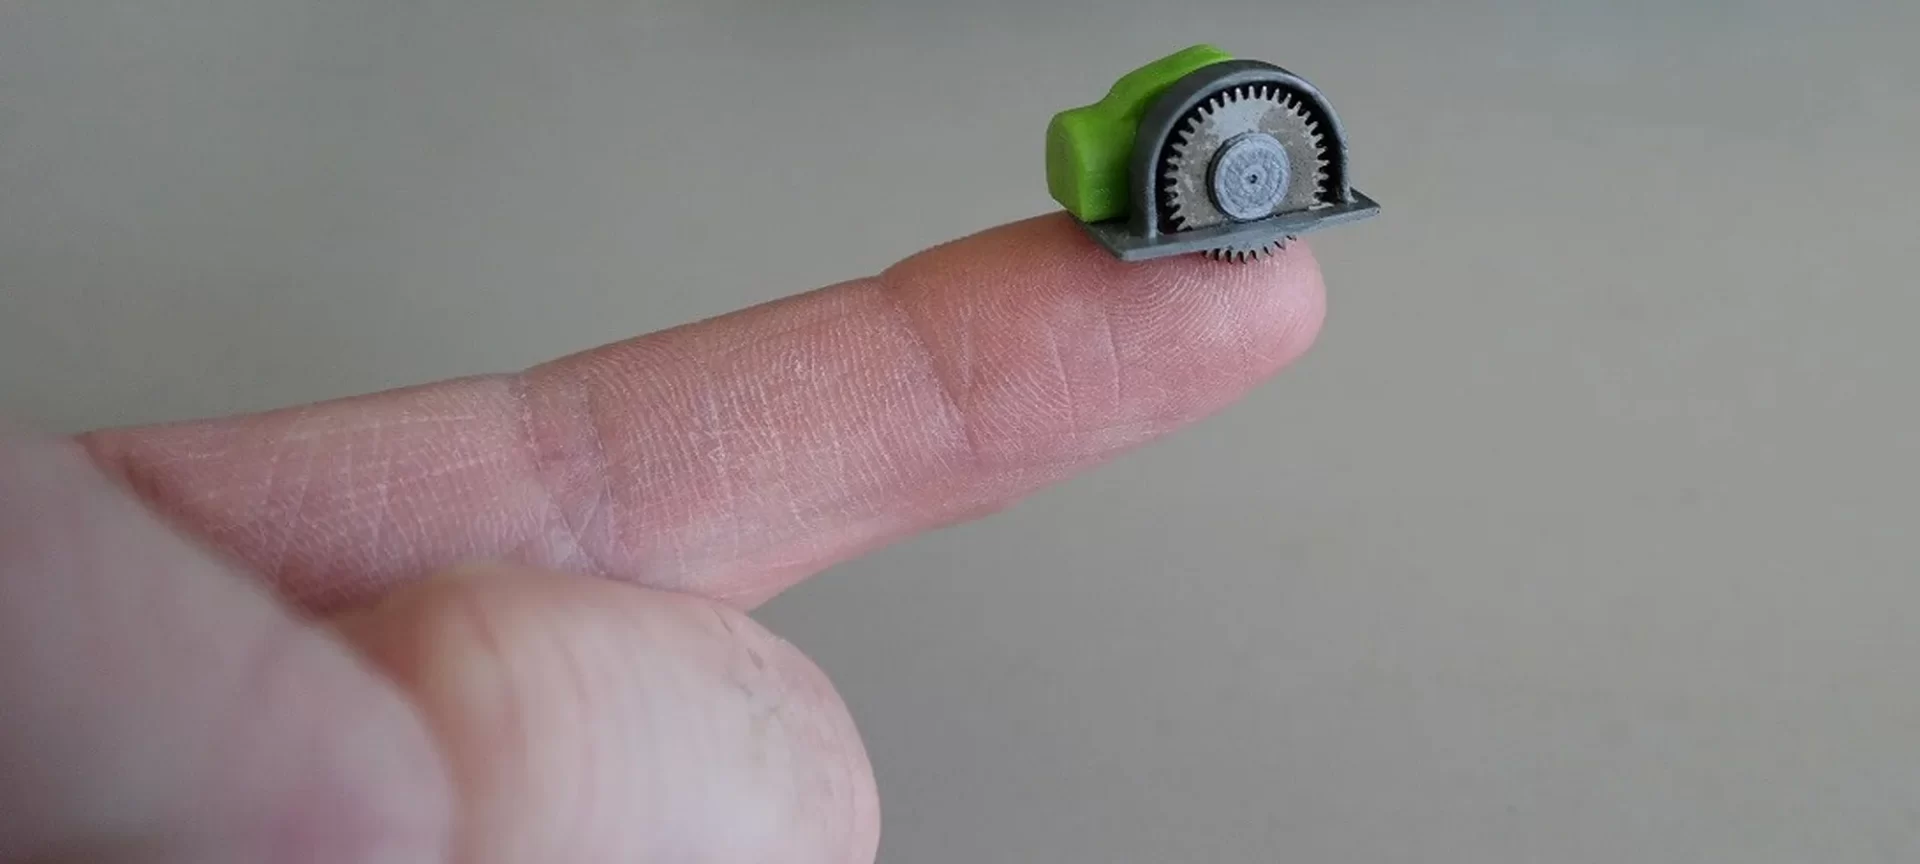 miniature saw